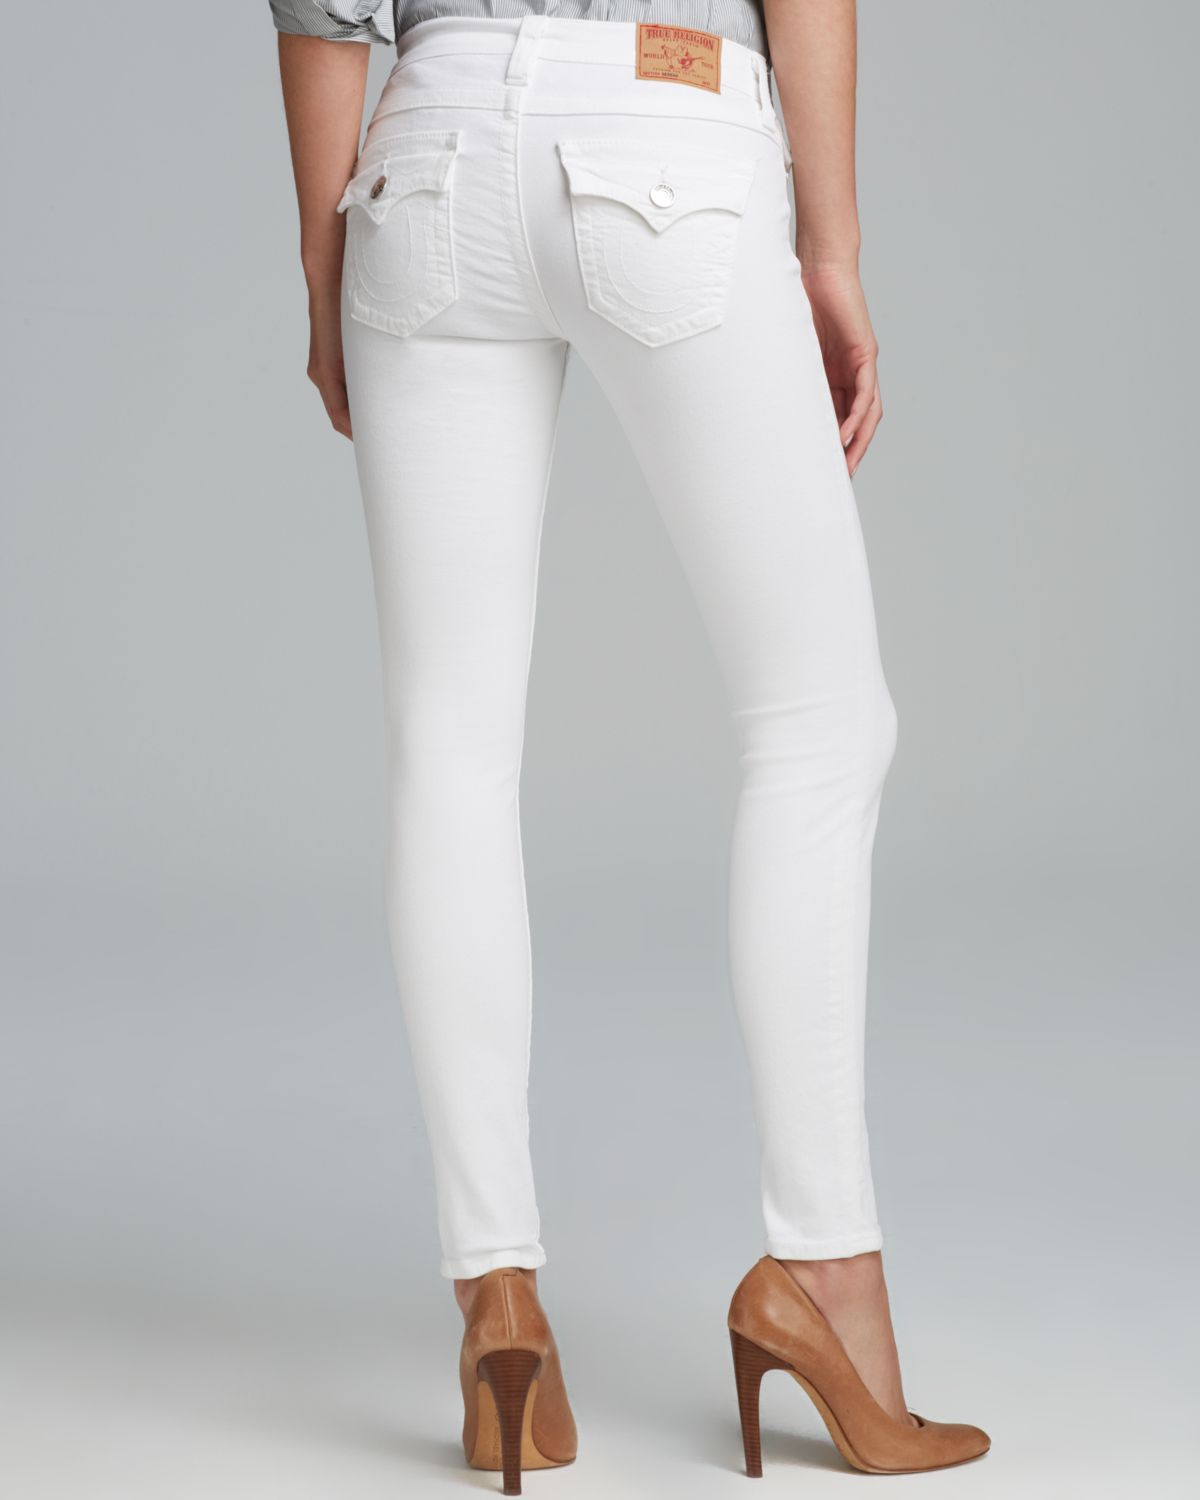 true religion white skinny jeans